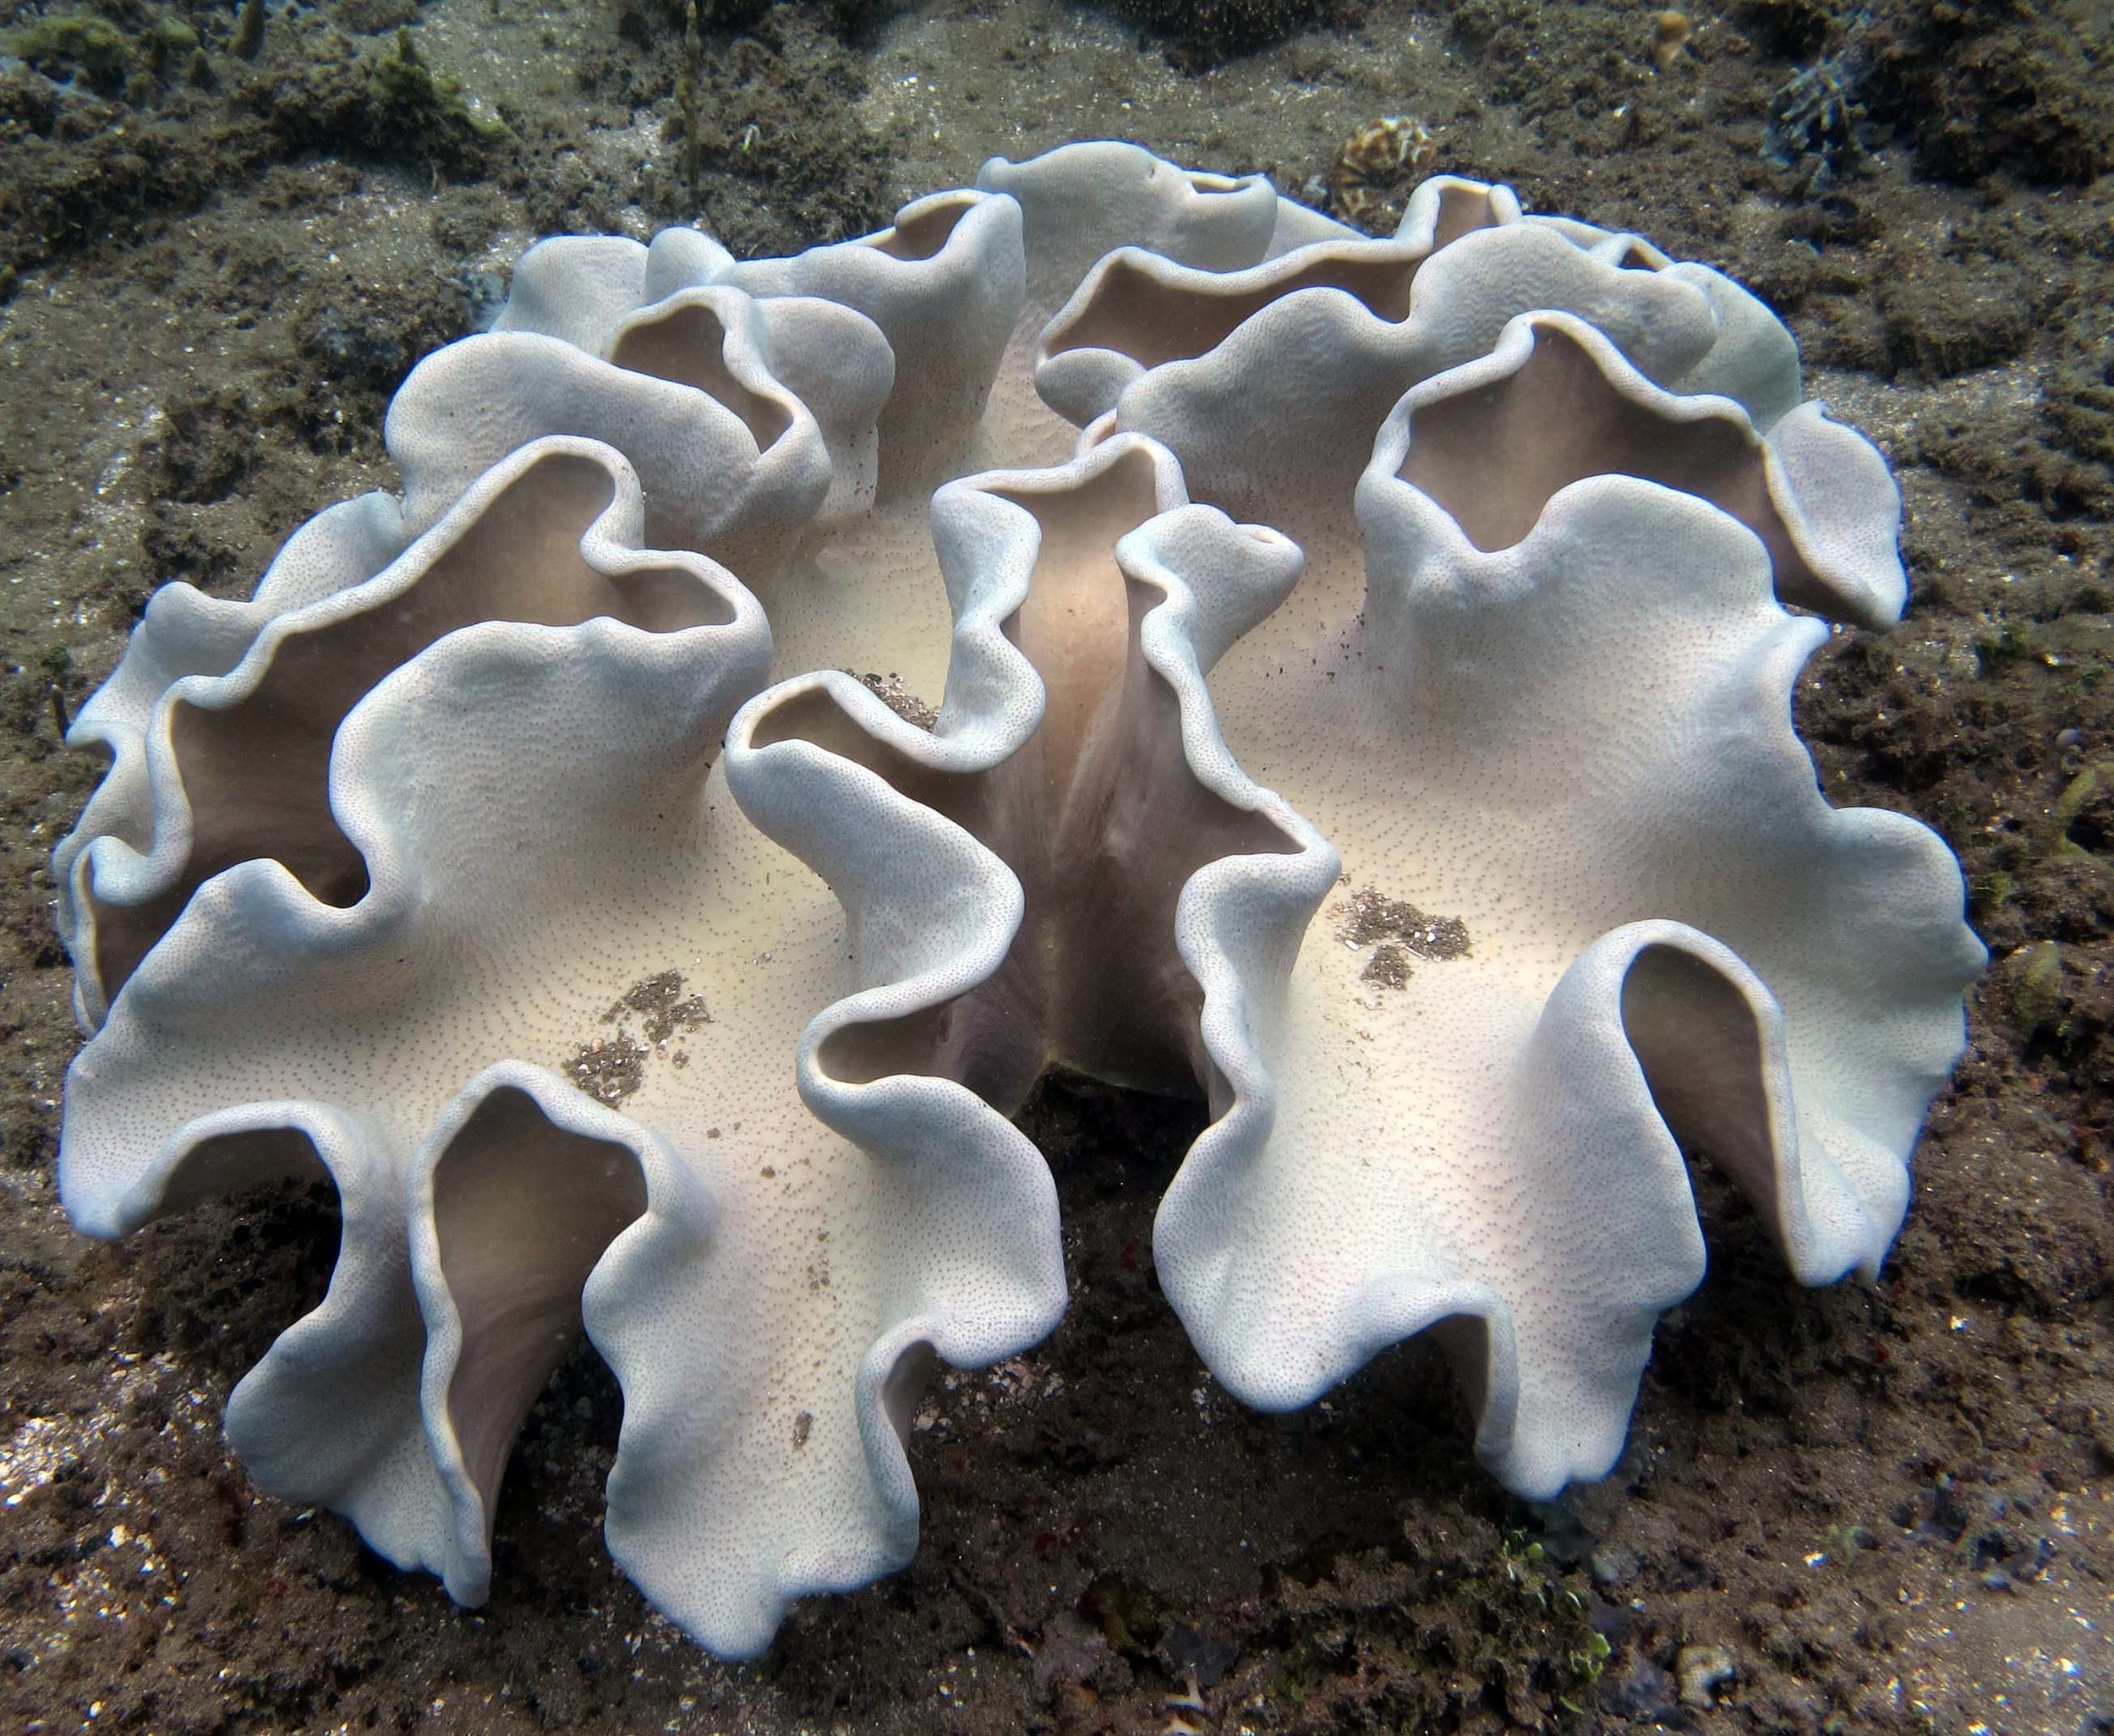 soft coral.jpg